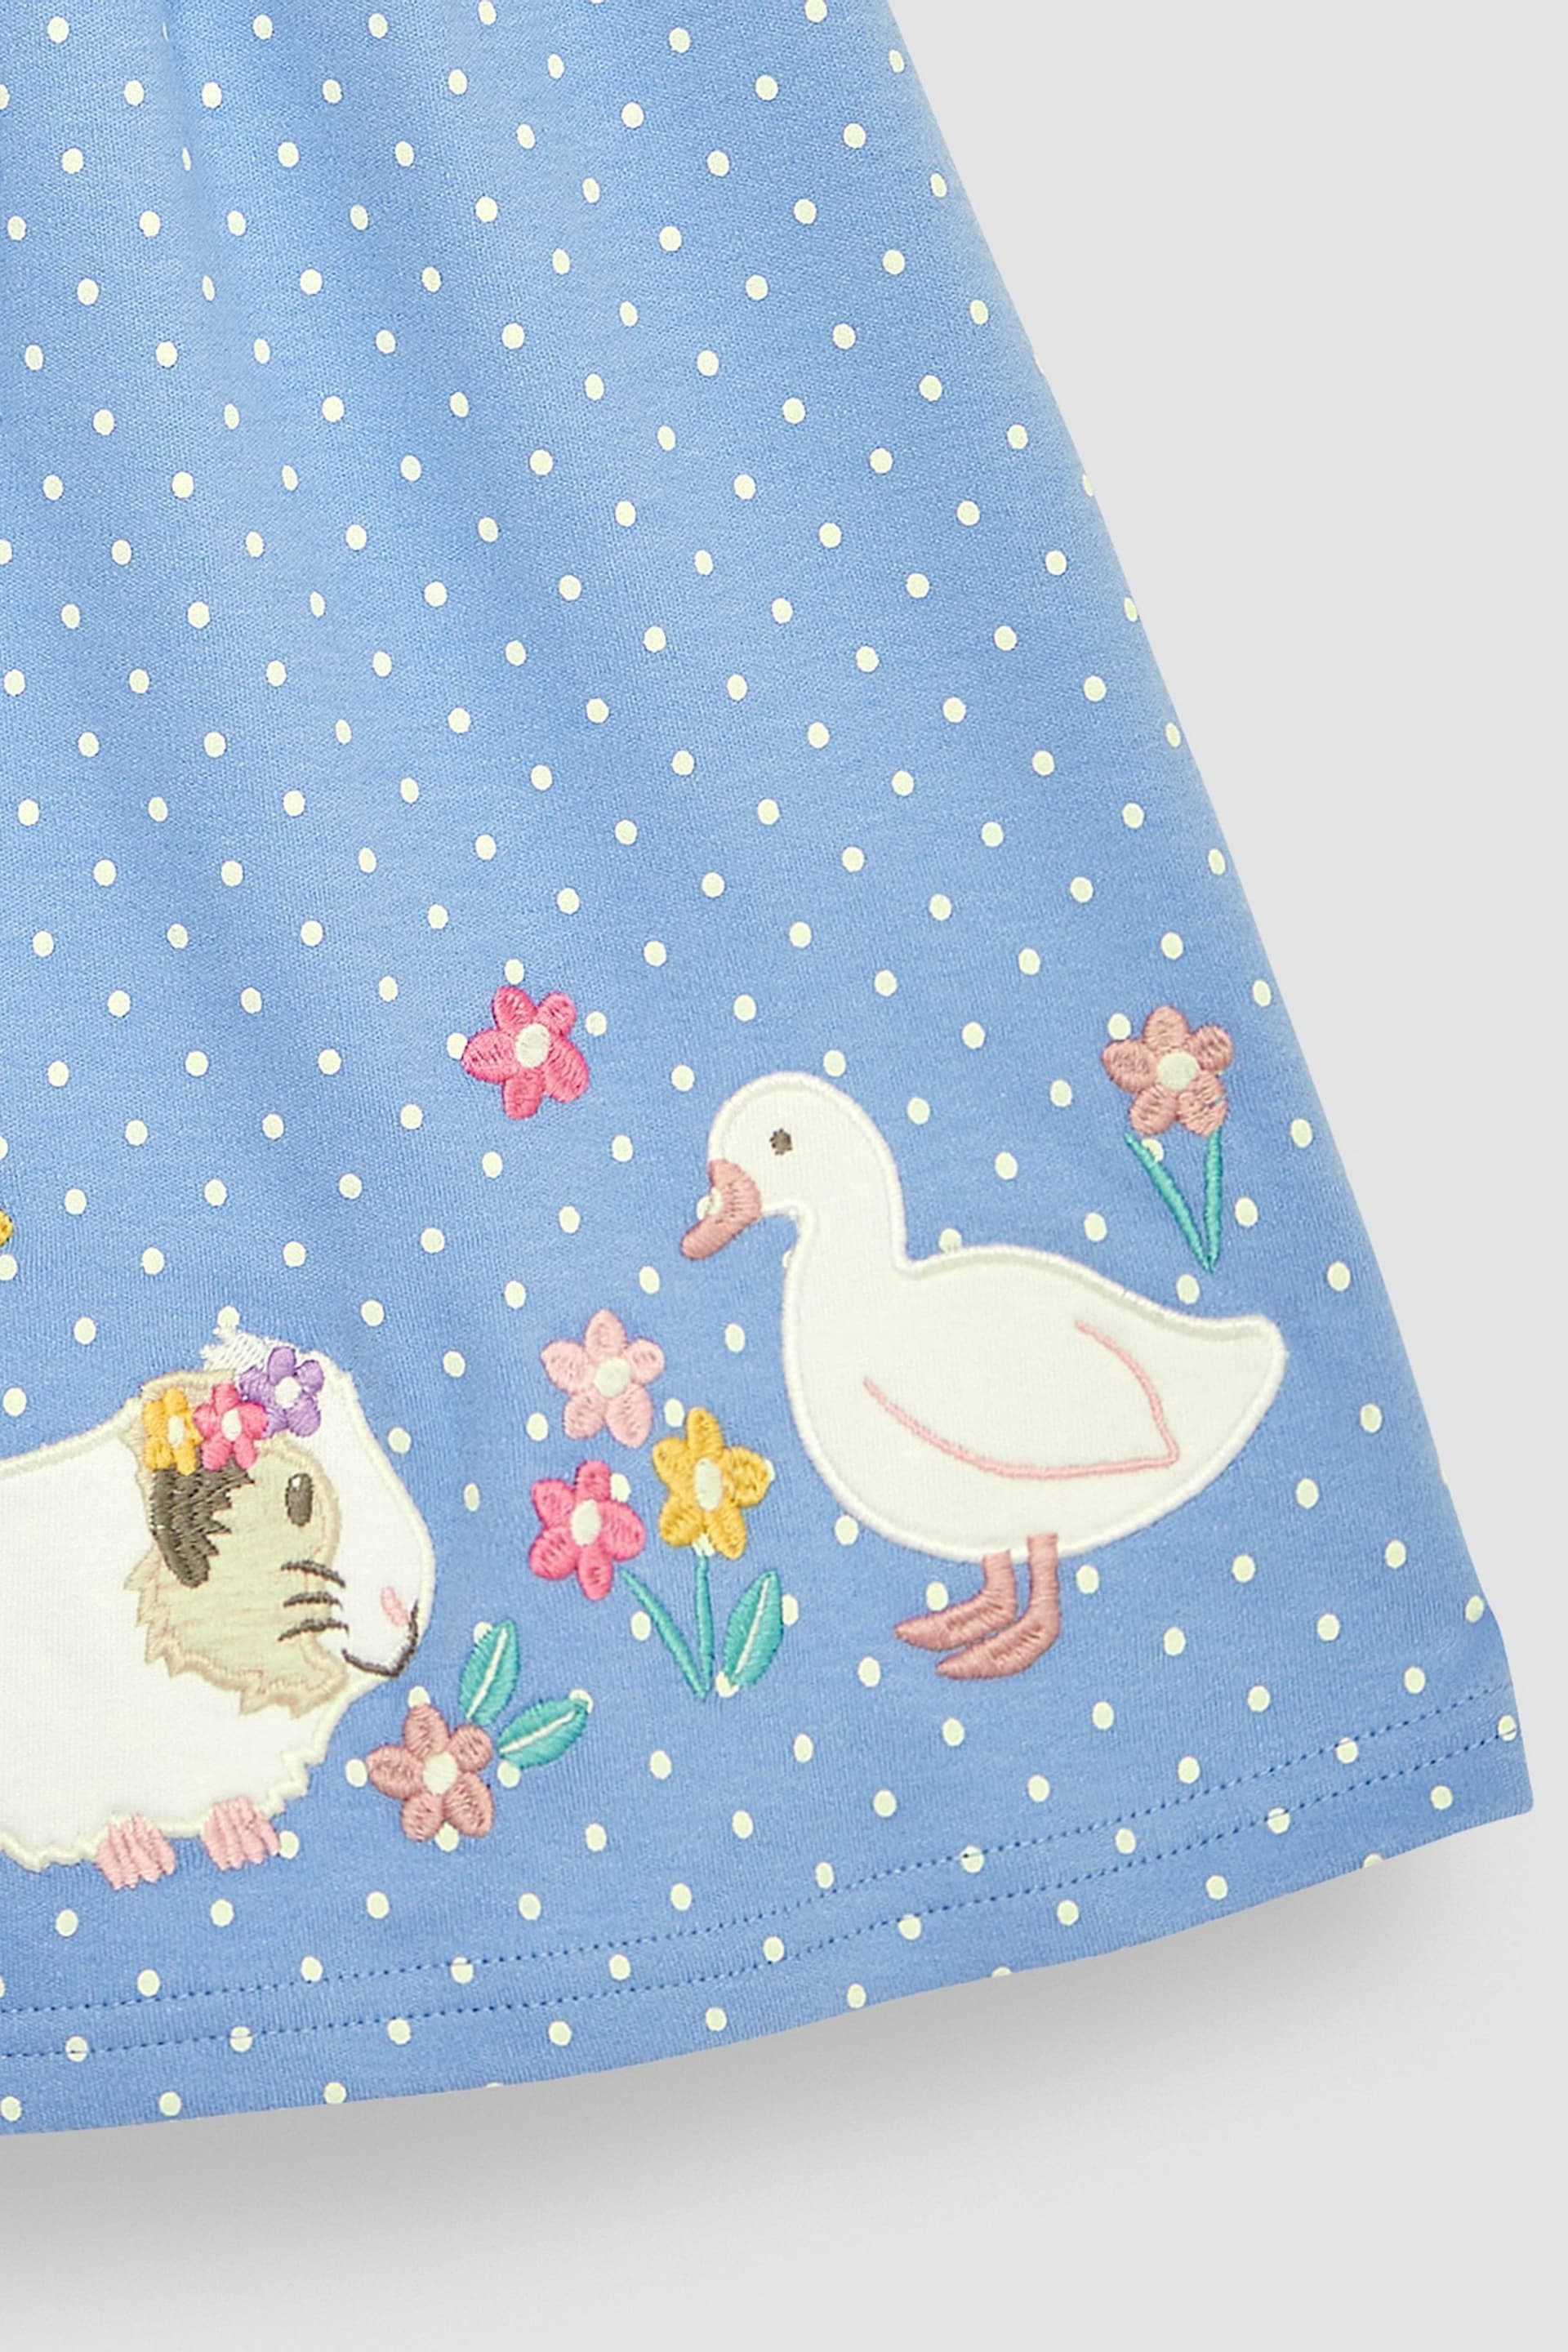 JoJo Maman Bébé Blue Guinea Pig & Duck Spot Appliqué Button Front Jersey Dress - Image 3 of 3